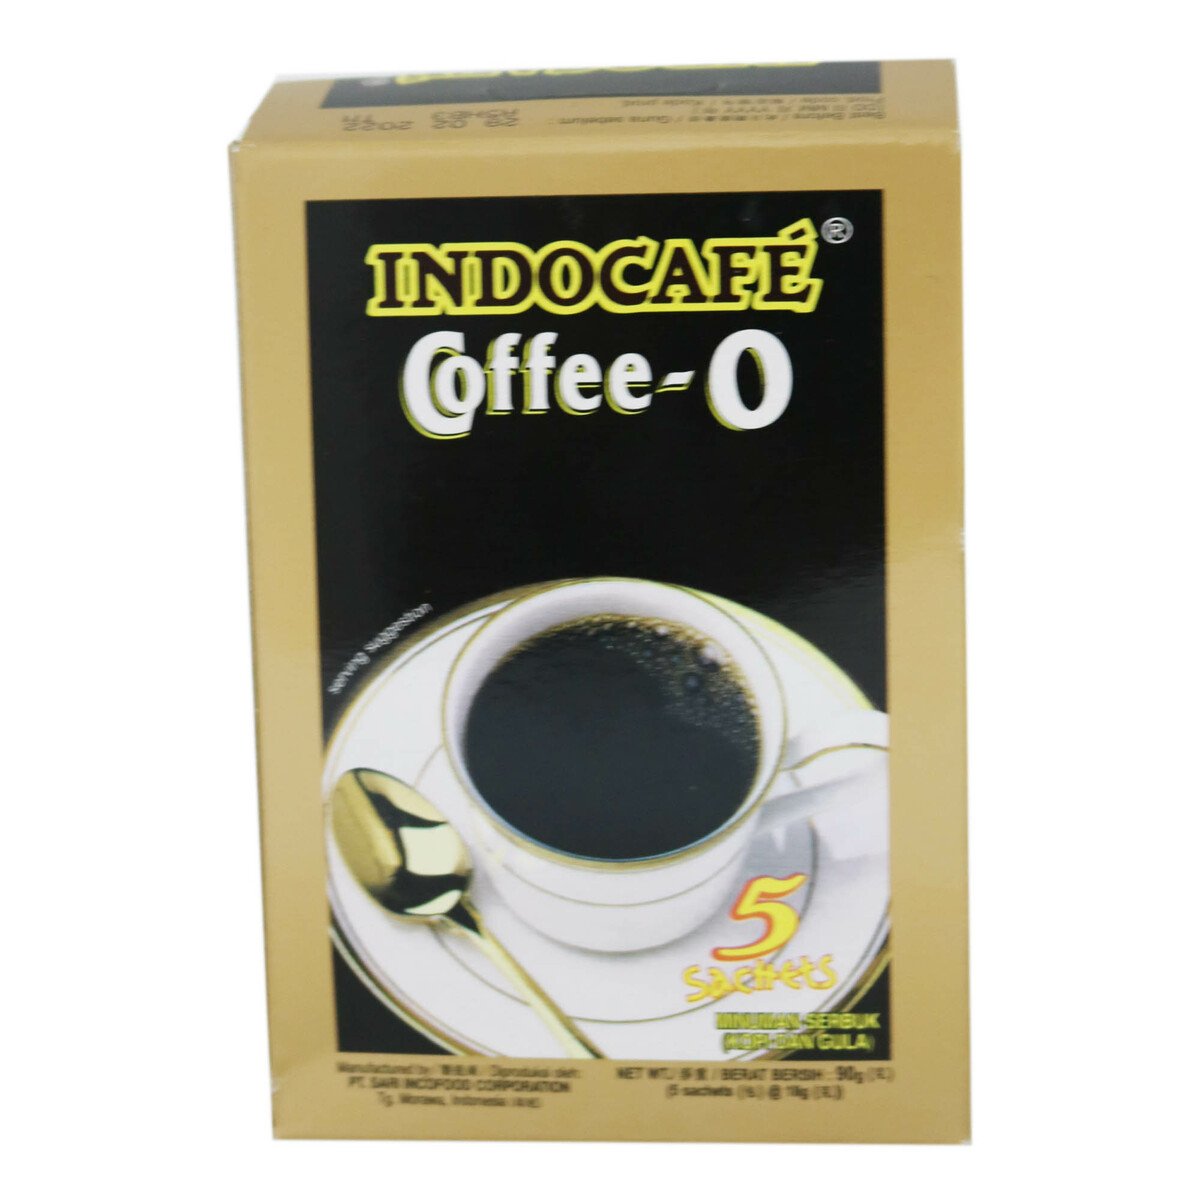 Indocafe Coffee-O Box 5pcs 18g